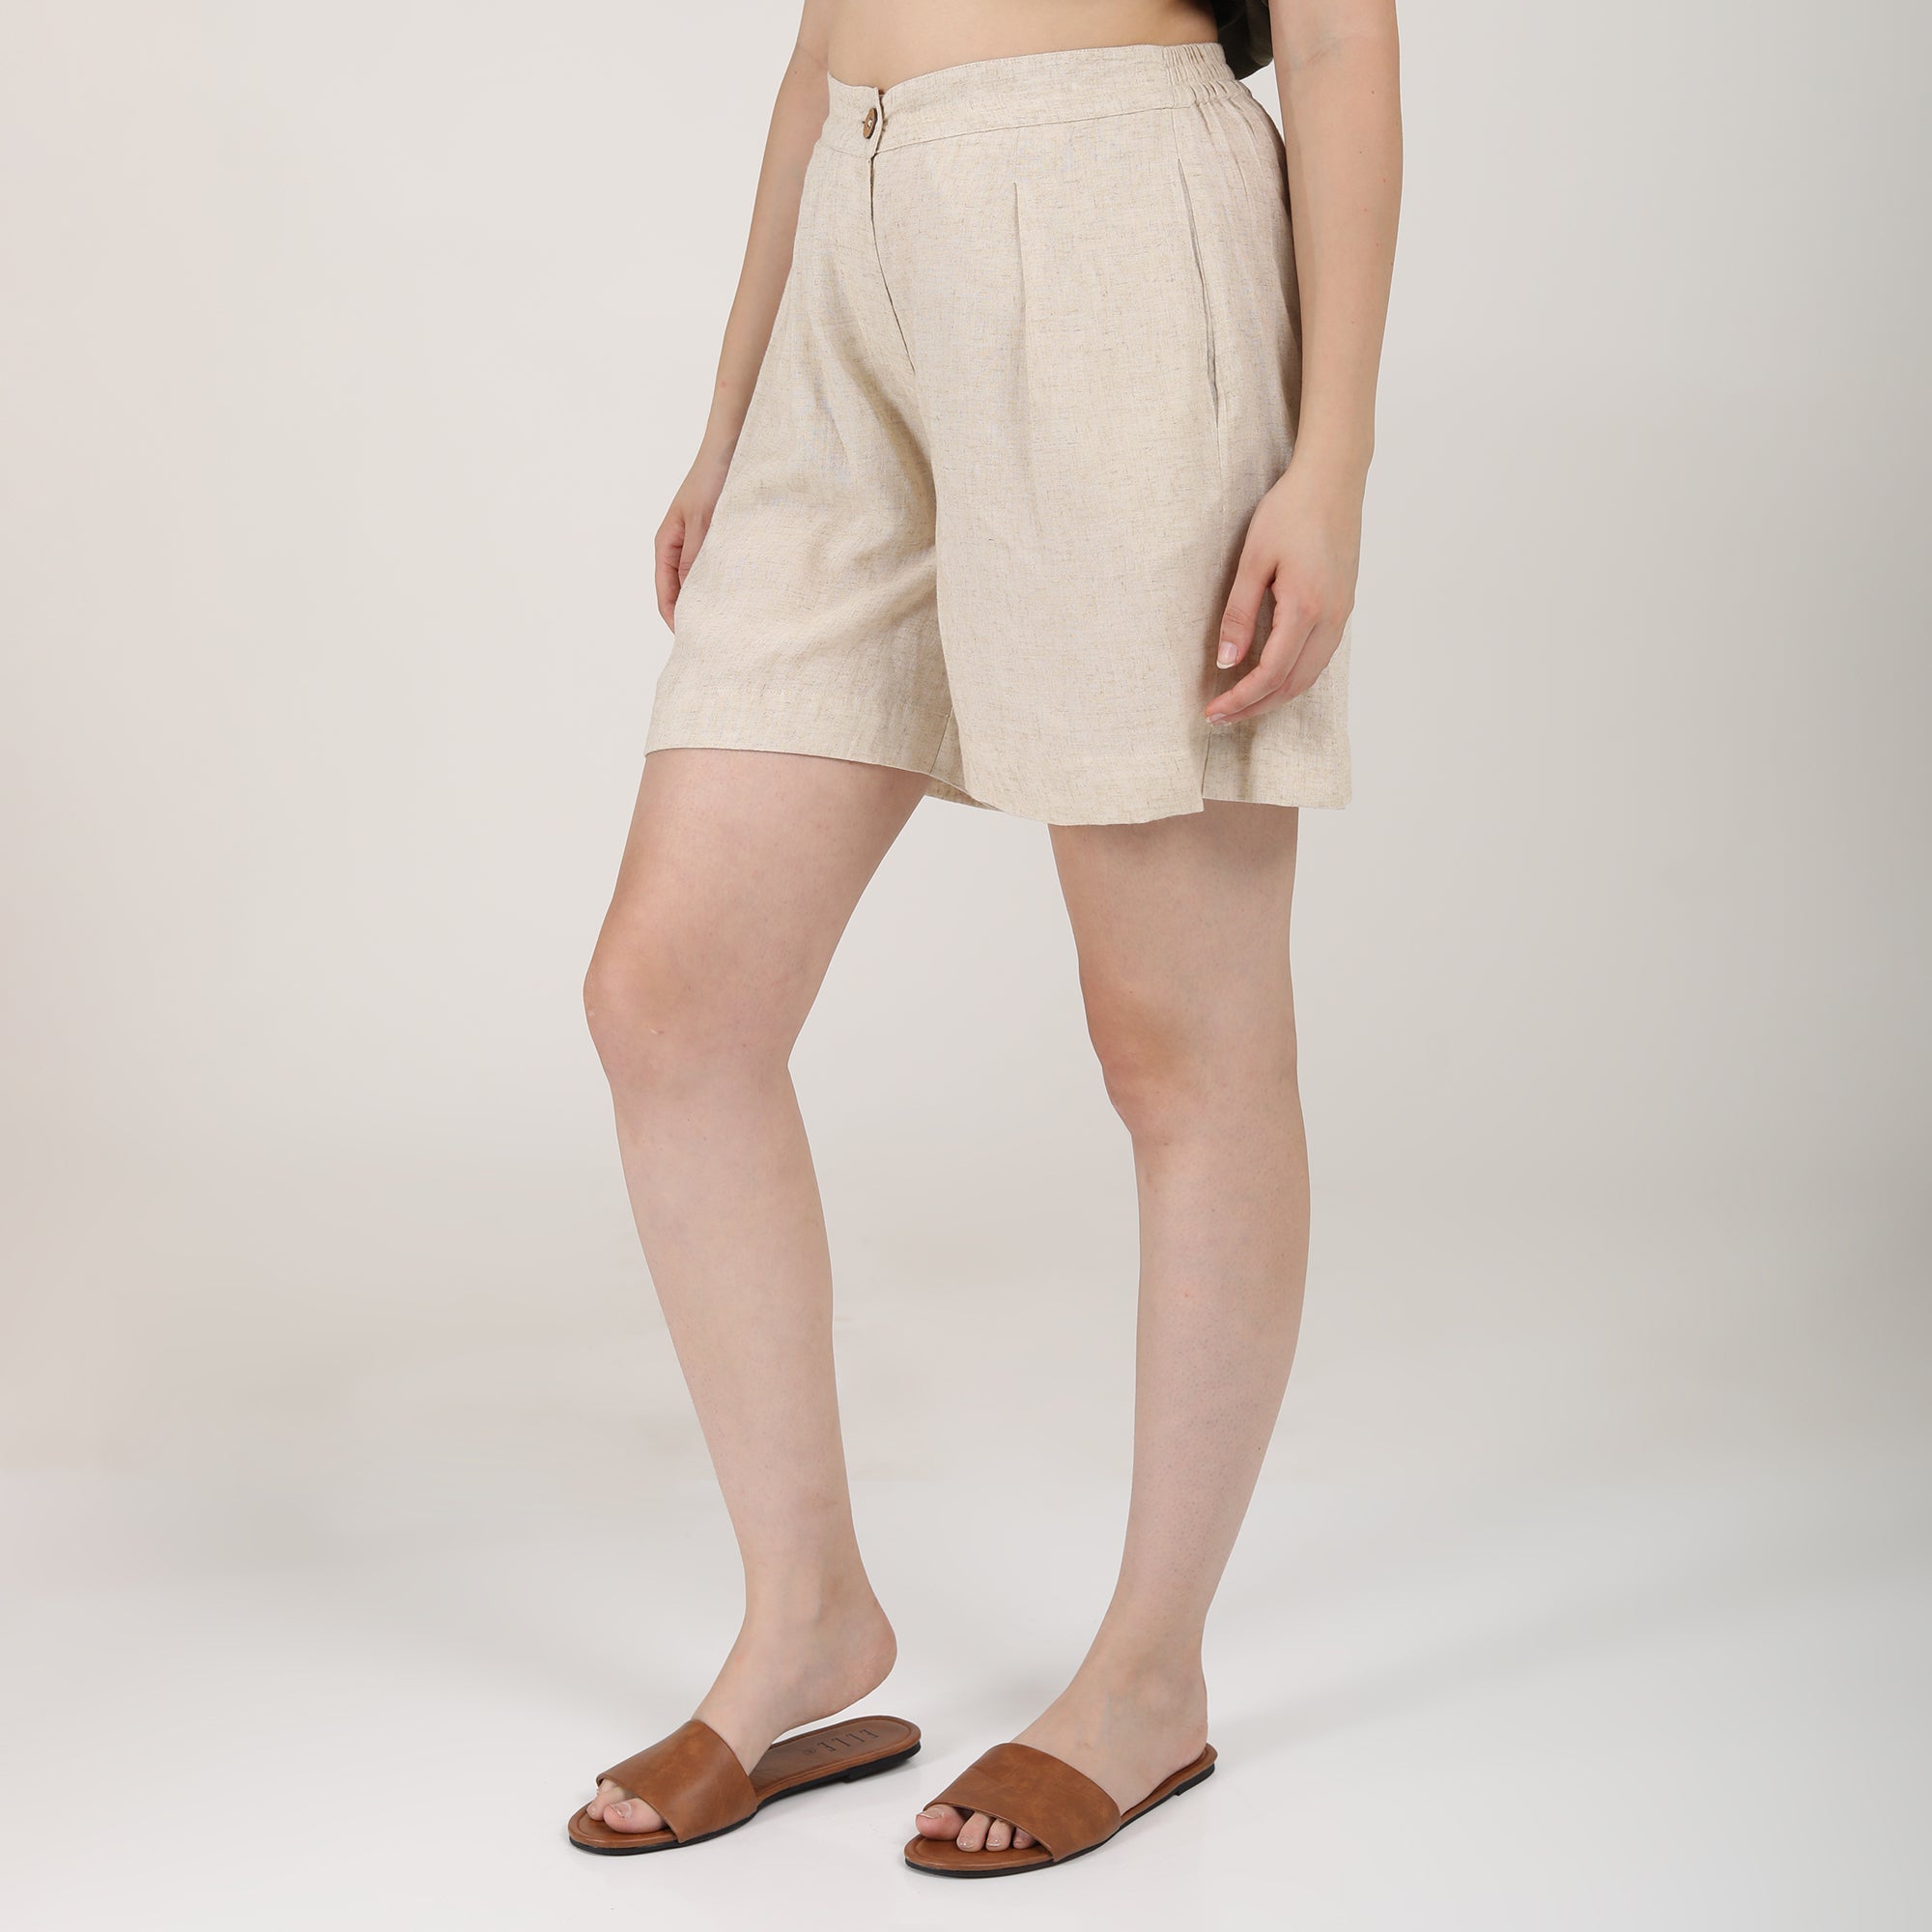 Gurkha Shorts - Beige